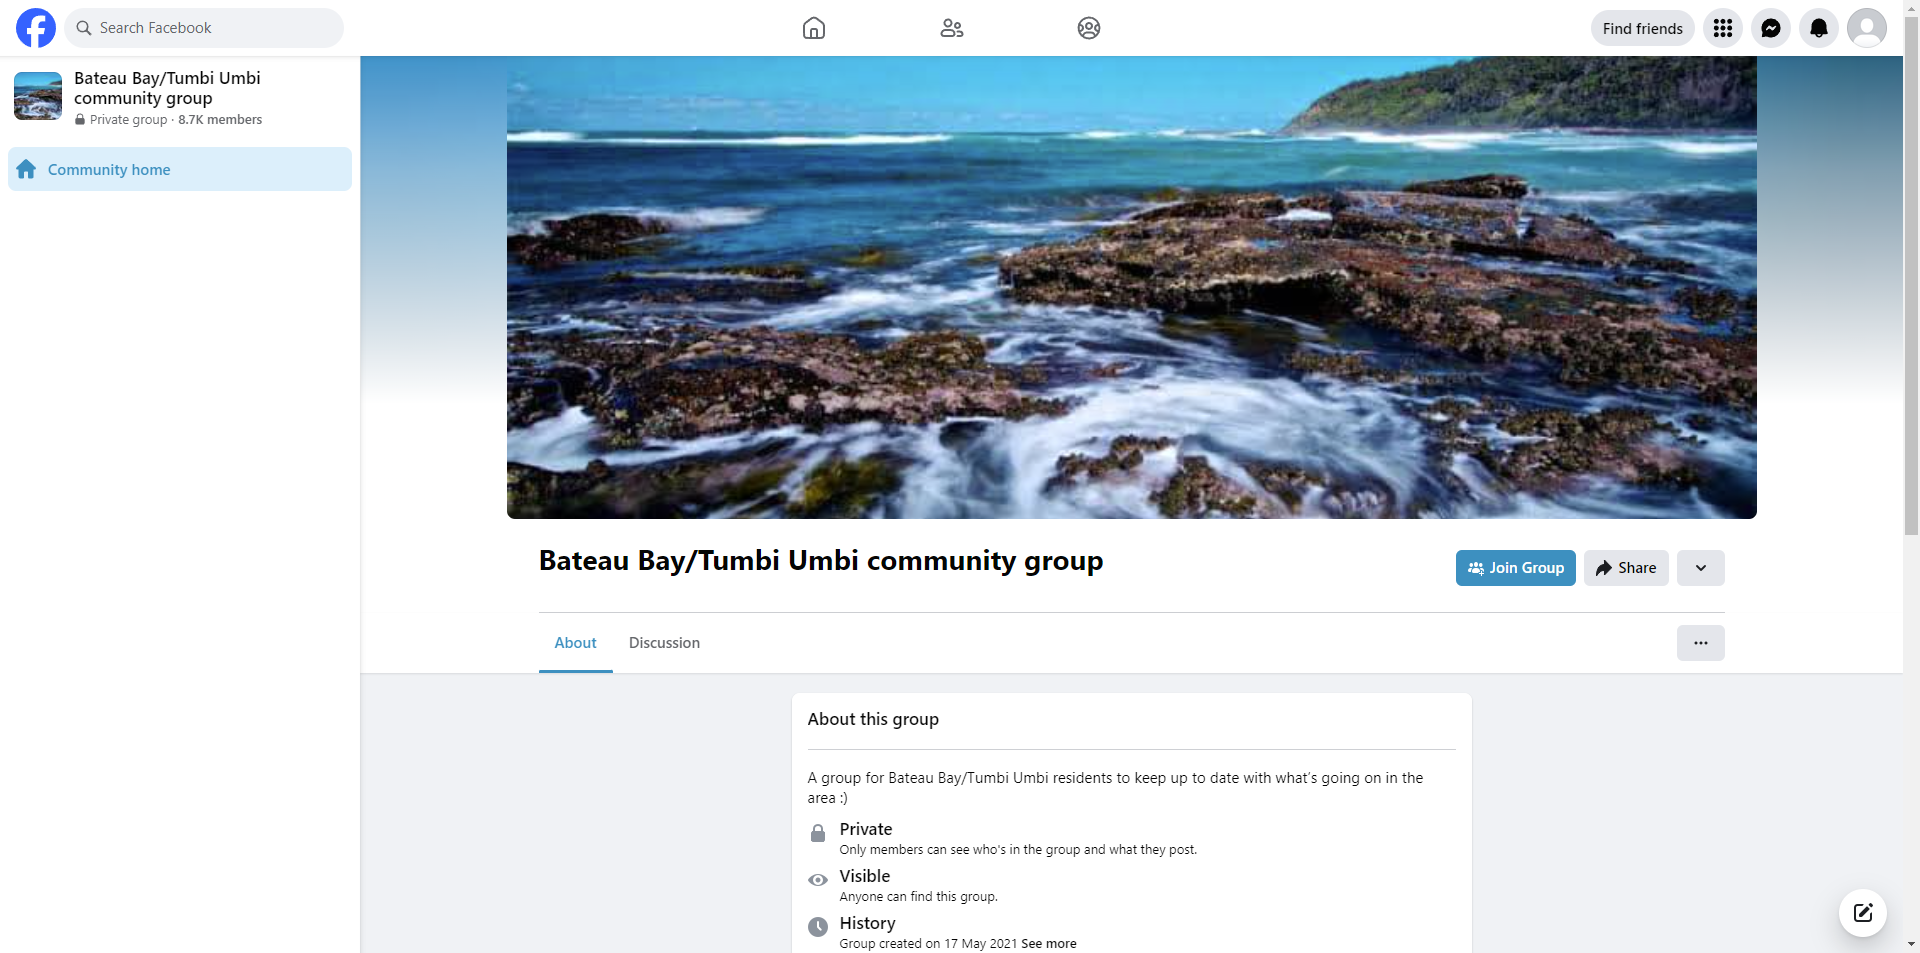 Bateau Bay/Tumbi Umbi Community Group